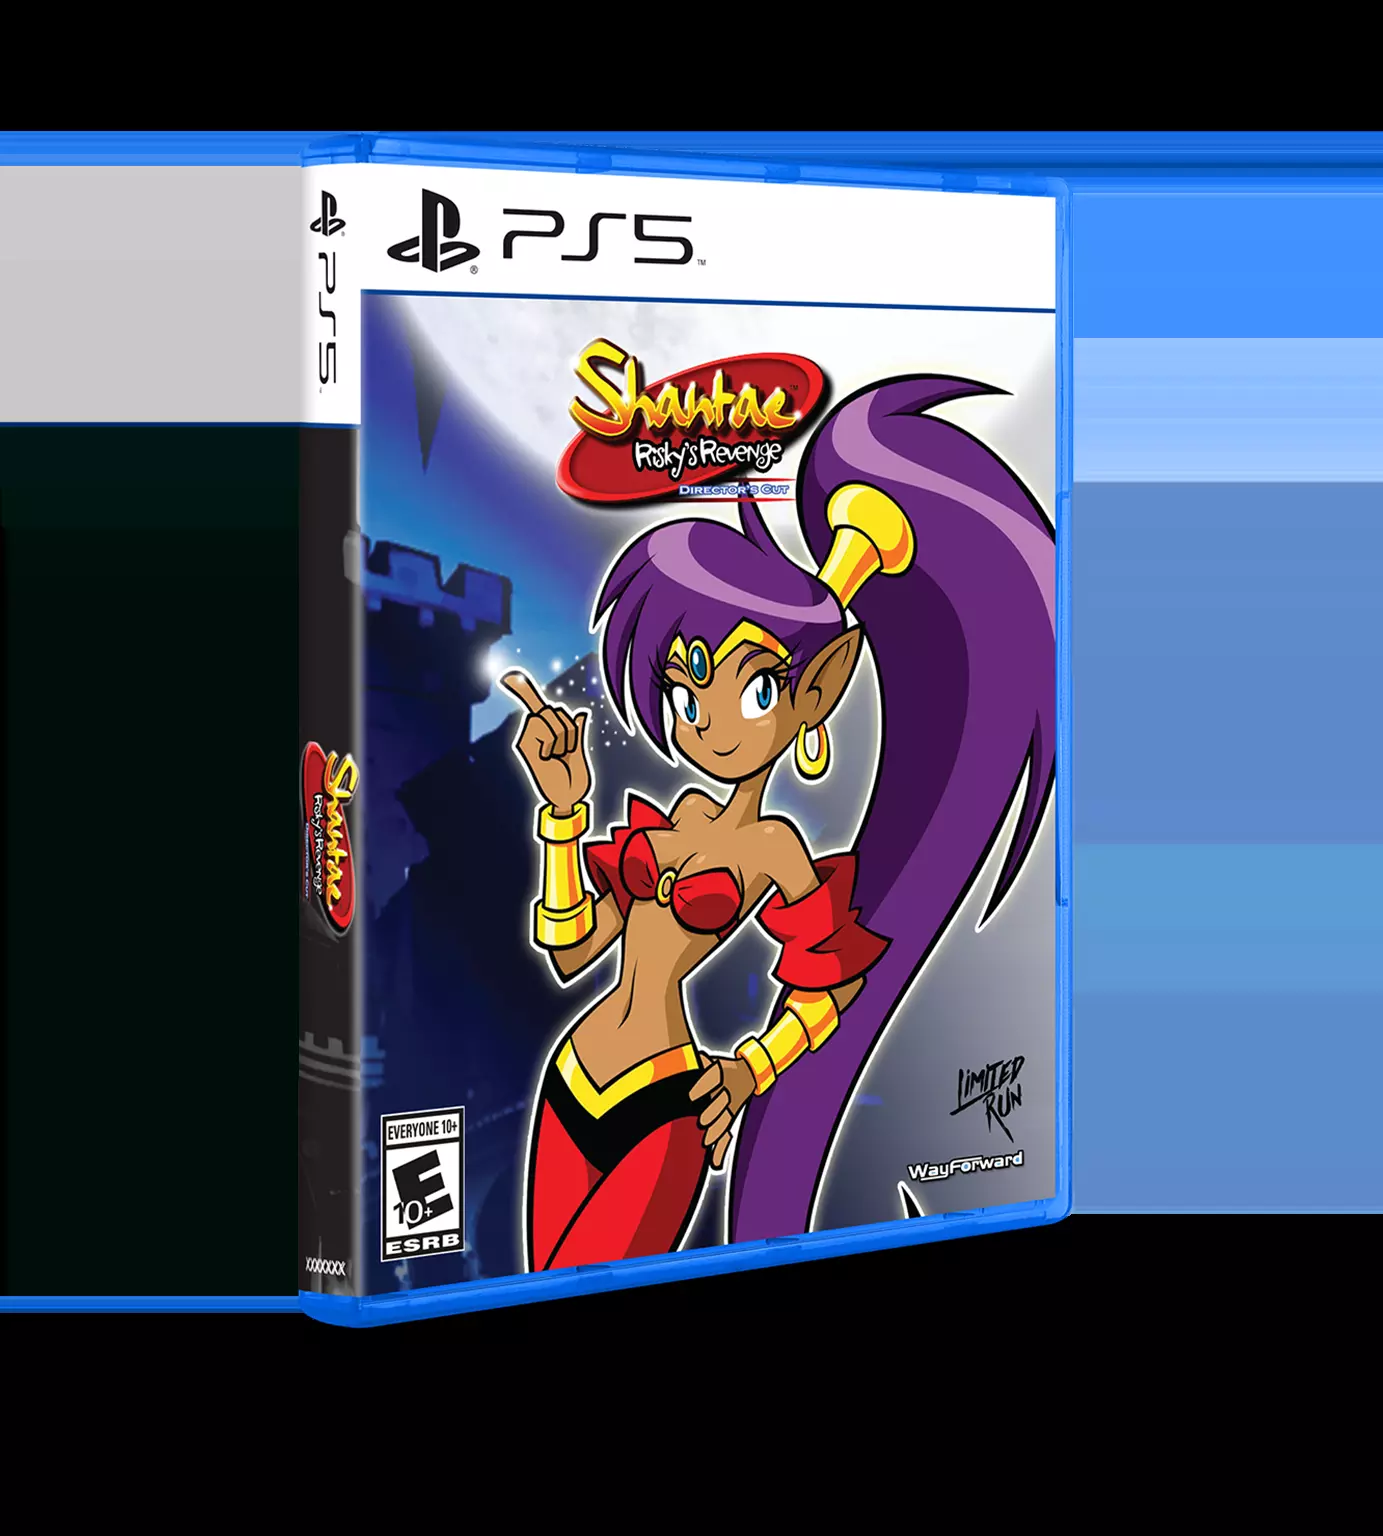 Shantae: Riskys Revenge Directors Cut Limited